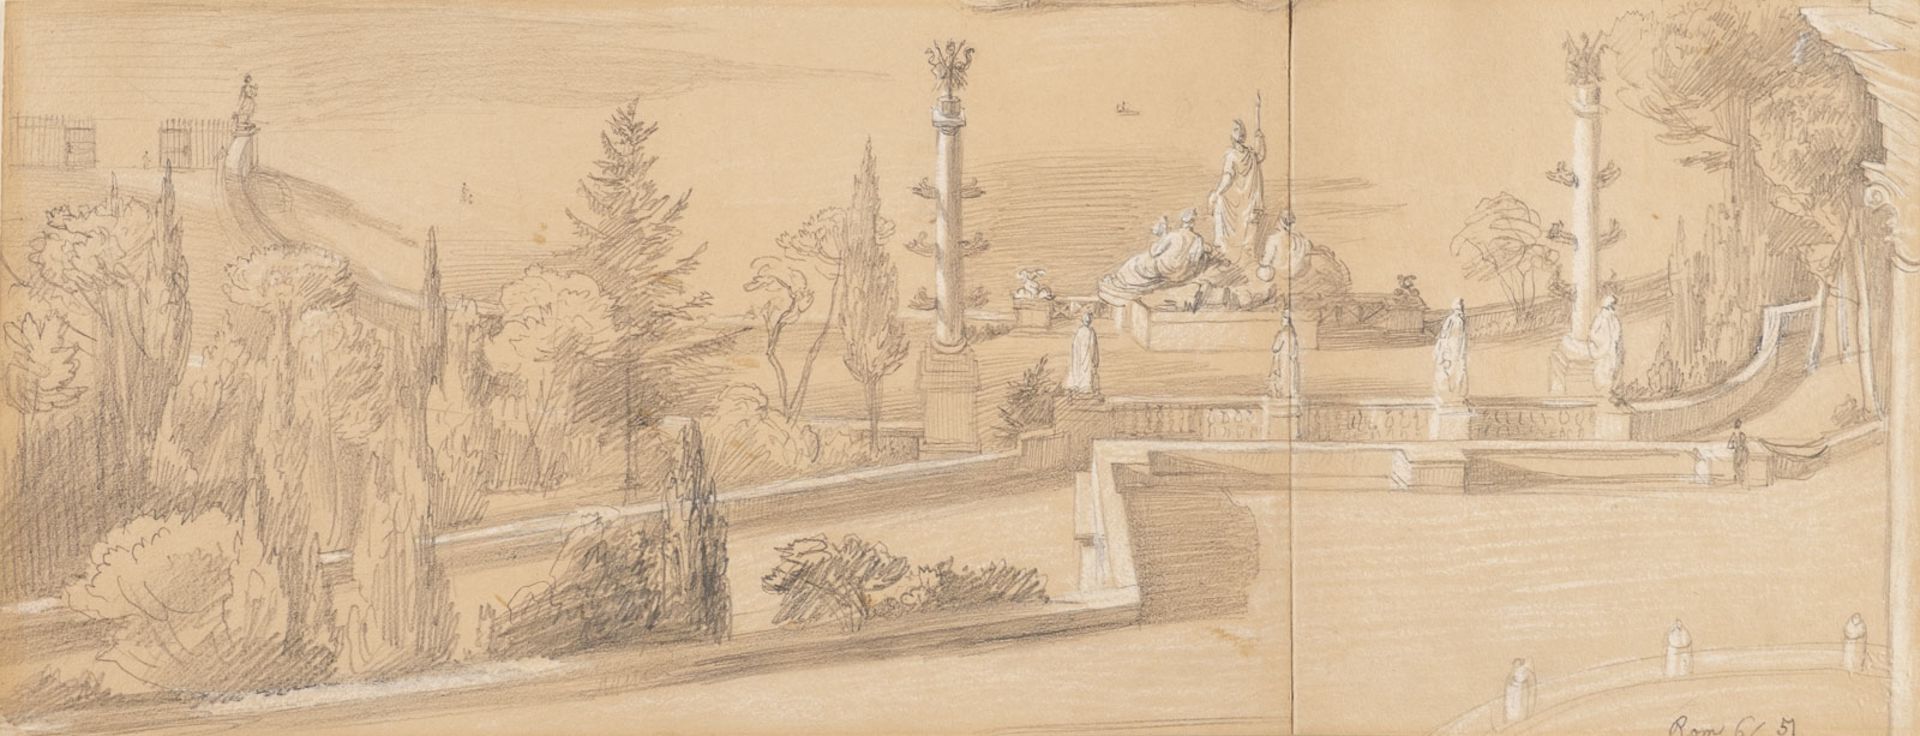 ABHANG DES PINCIO IN ROM, 1851